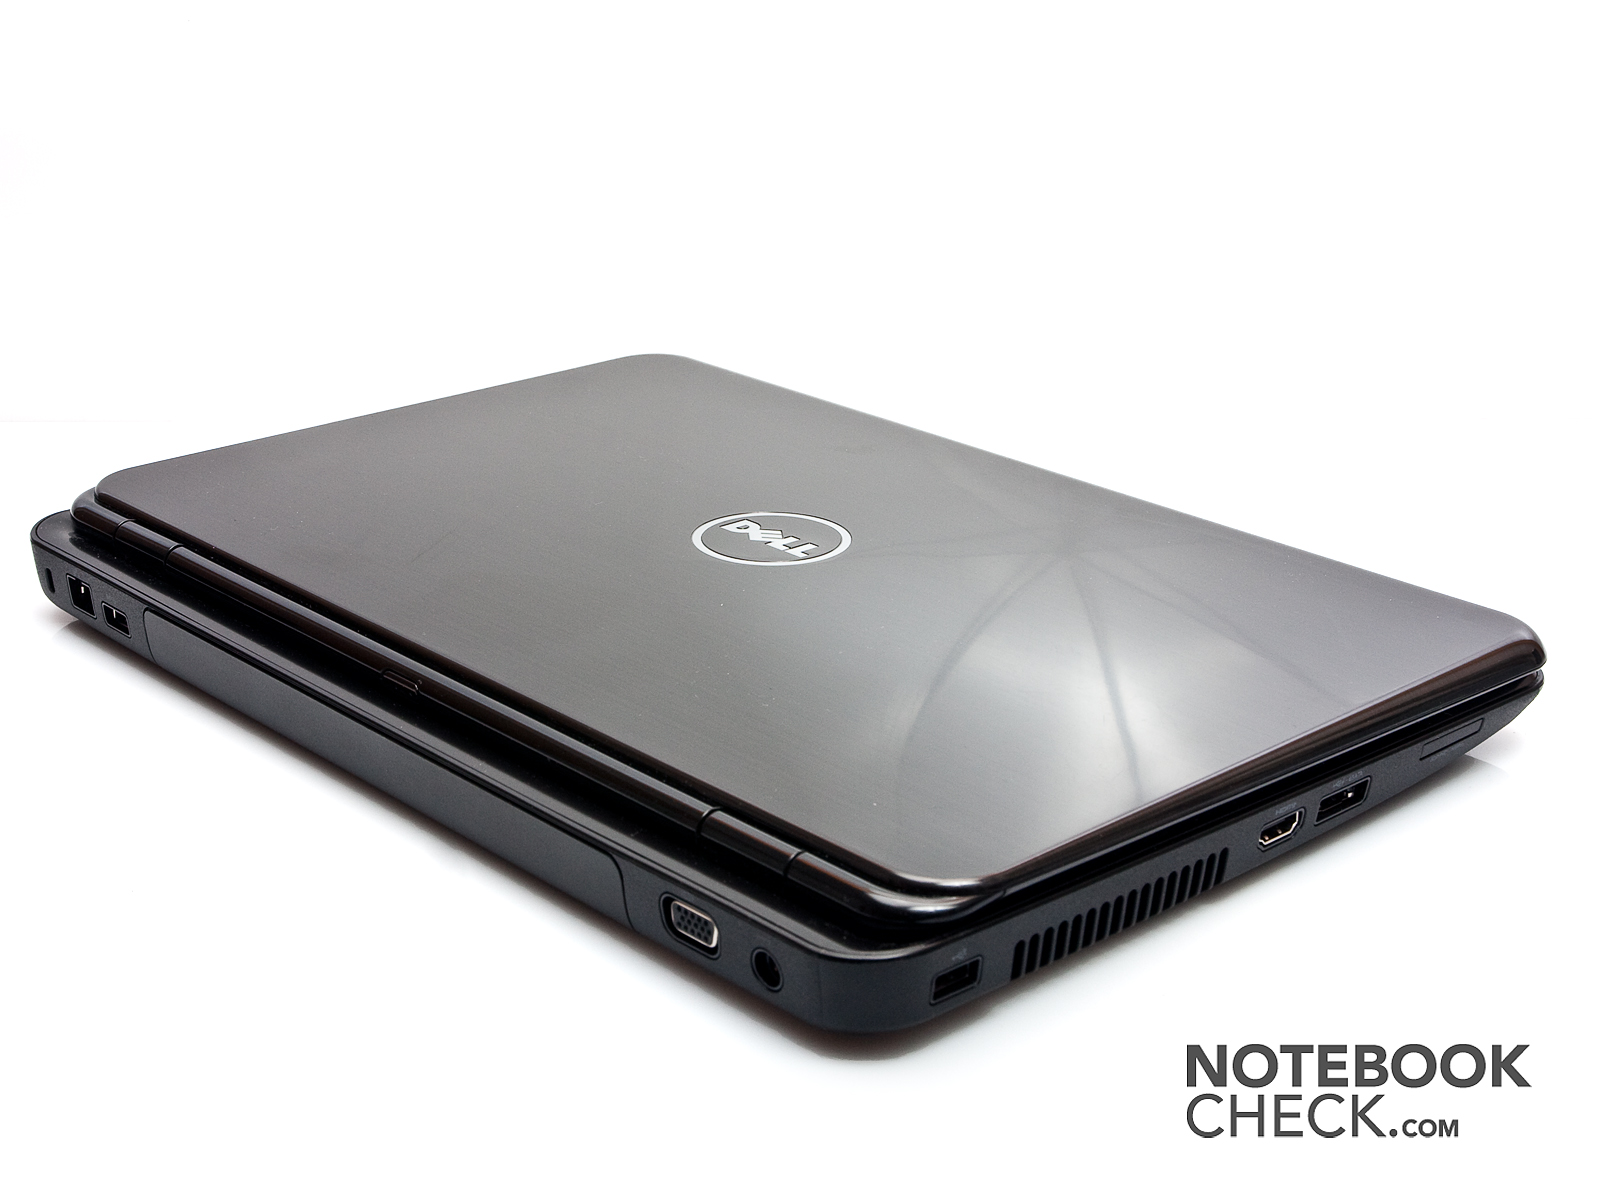 Ноутбук Dell Inspiron N5110 I5 Отзывы